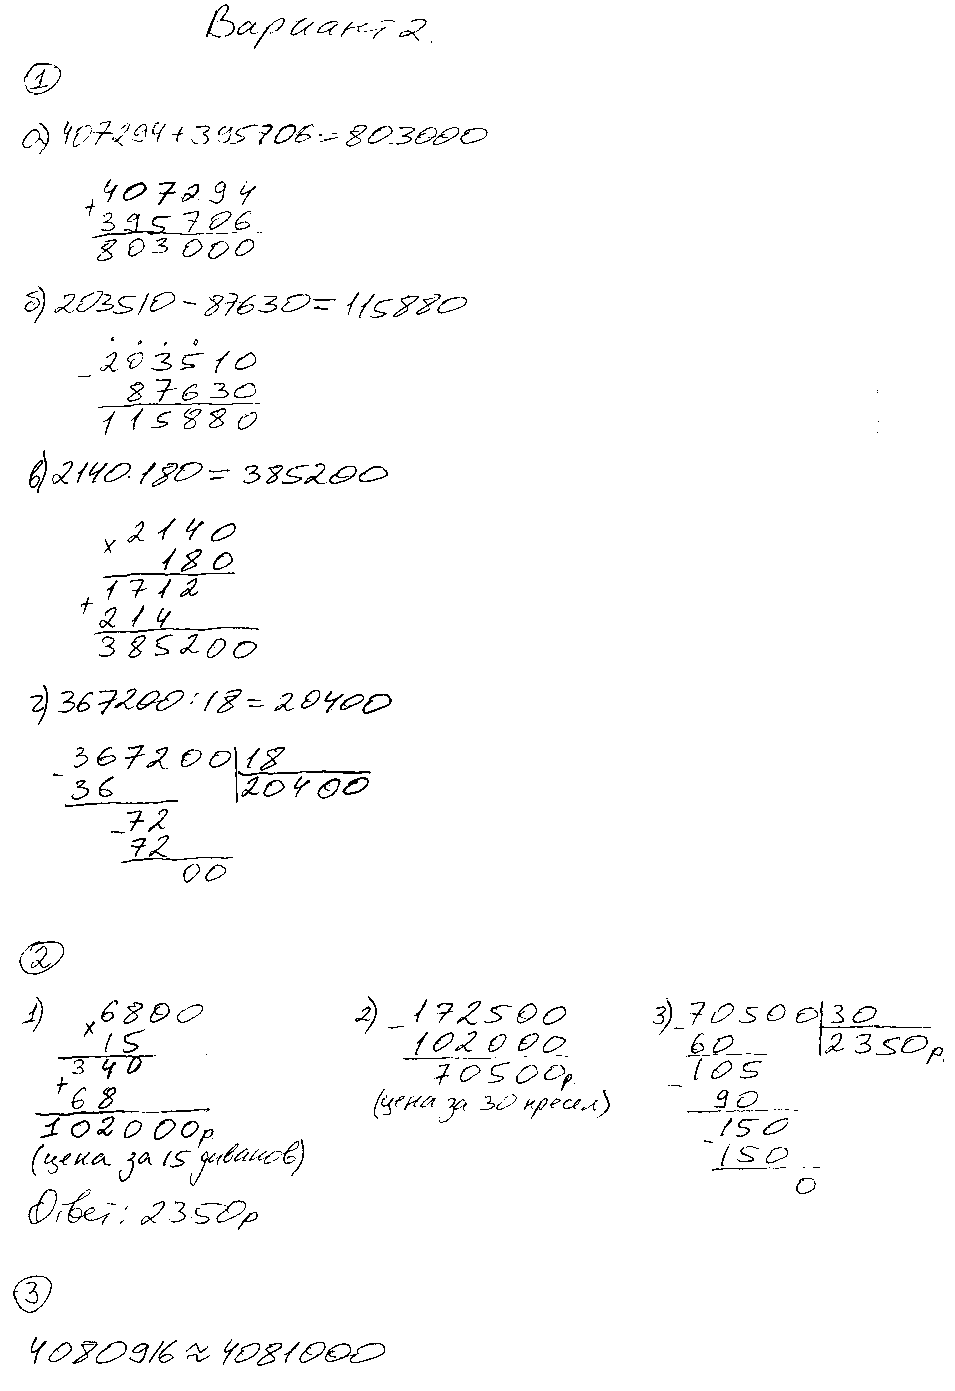 ГДЗ Математика 5 класс - Вариант 2